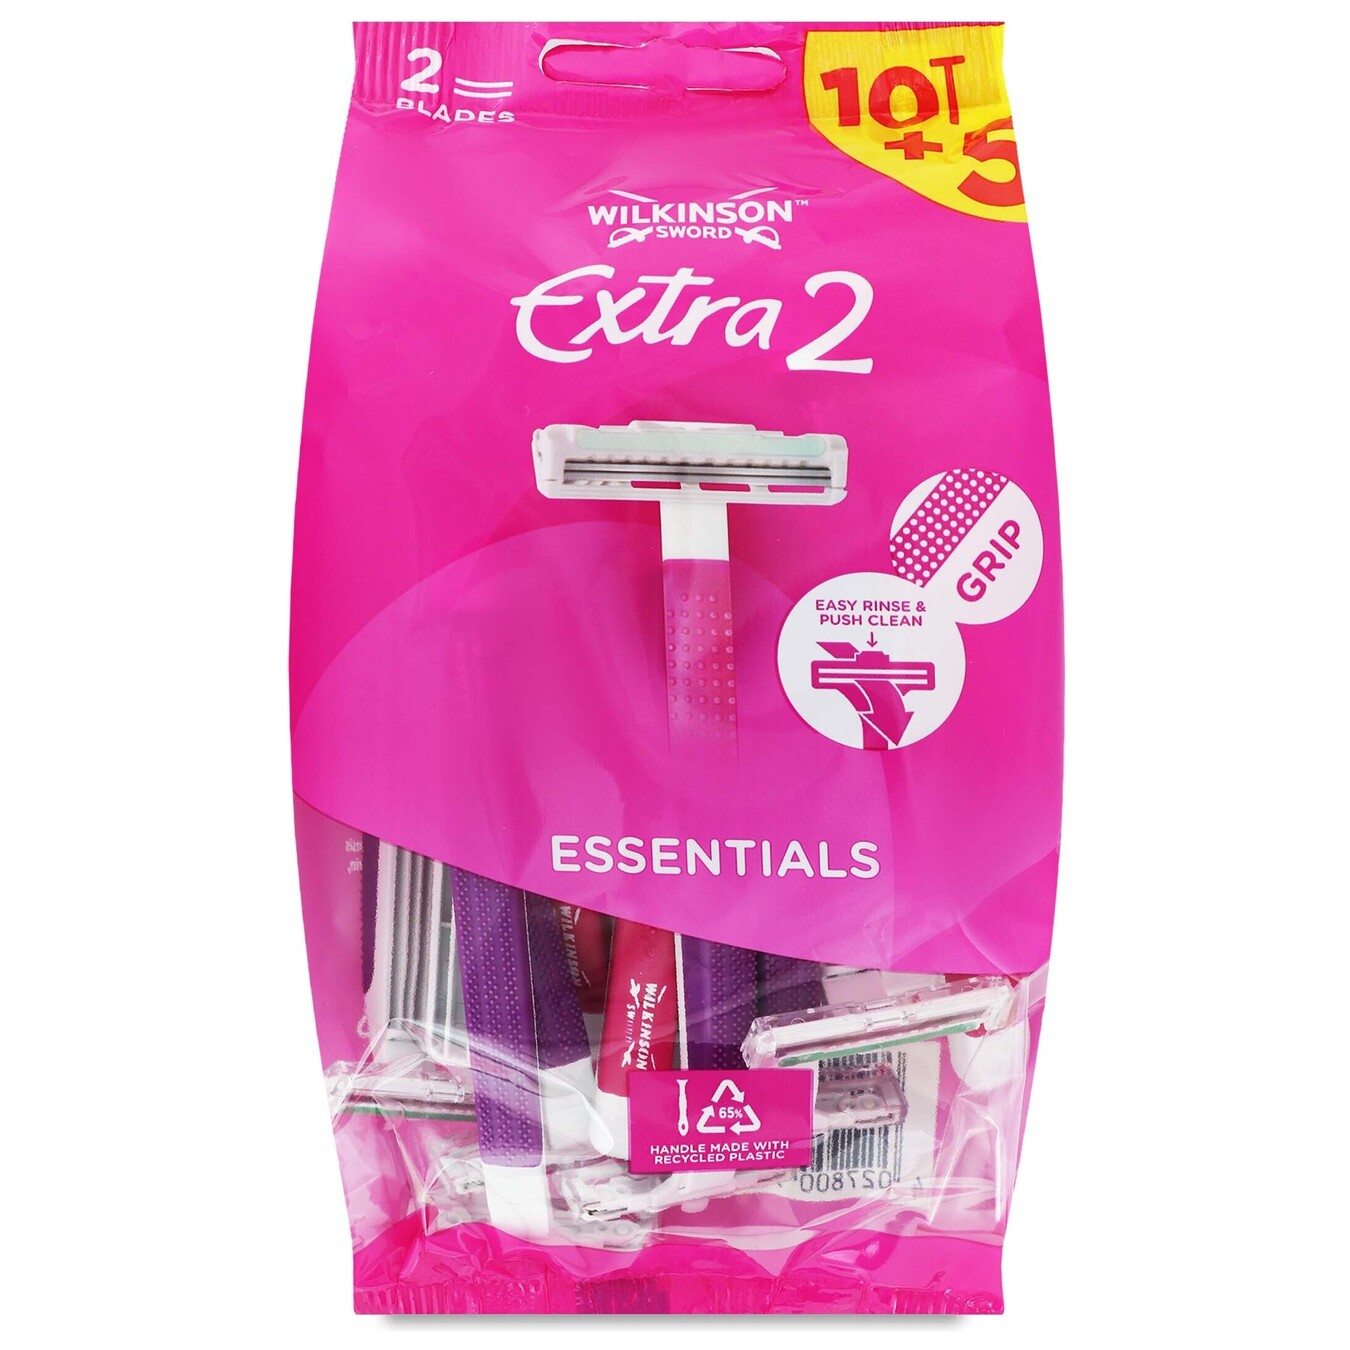 Wilkinson Sword Extra2 Essentials women's razor 15 pcs